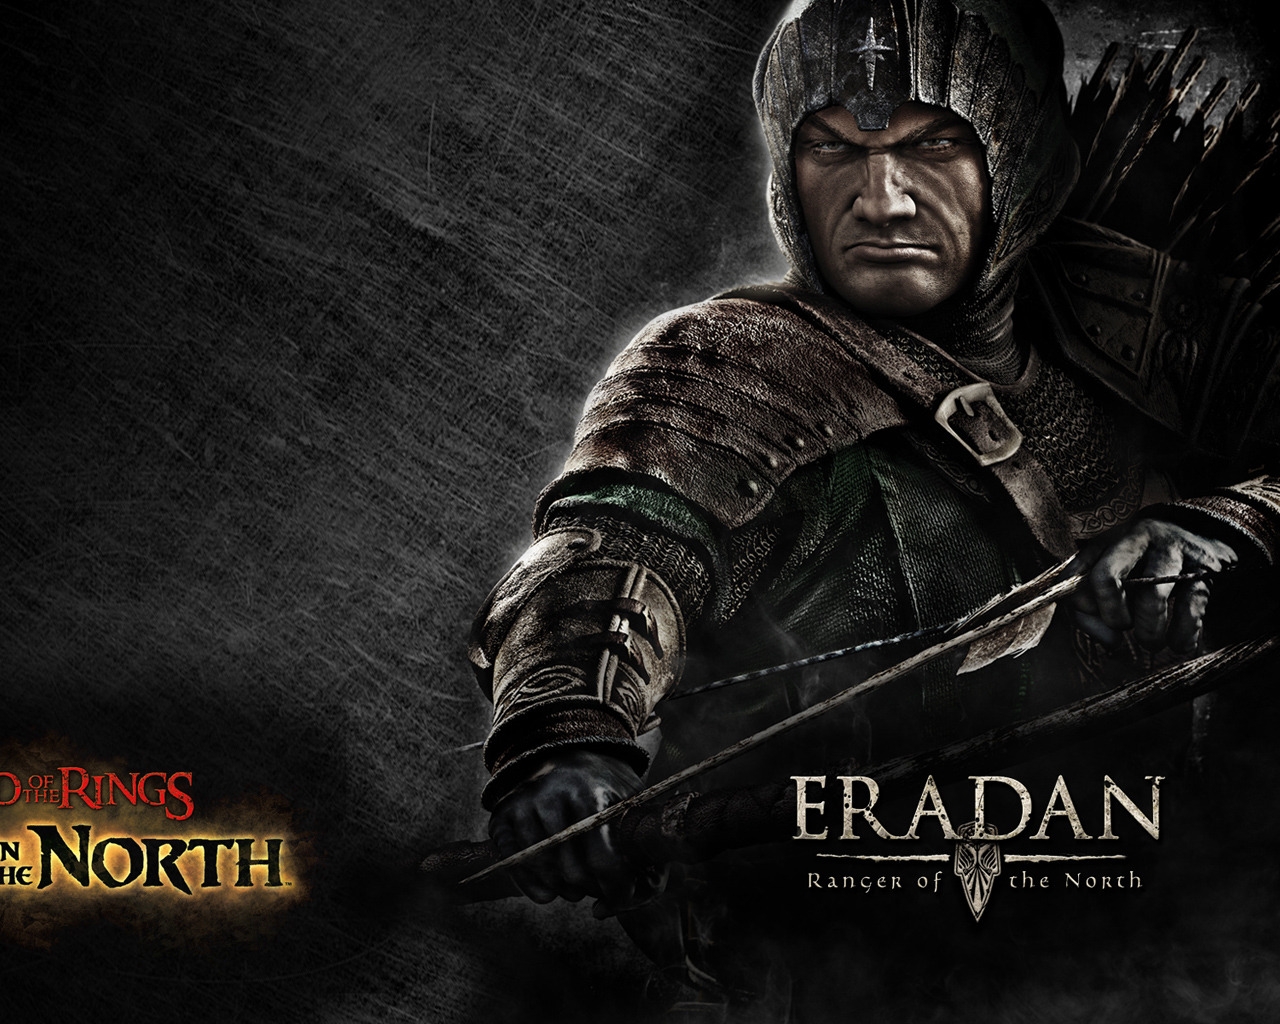 Eradan War in the North for 1280 x 1024 resolution